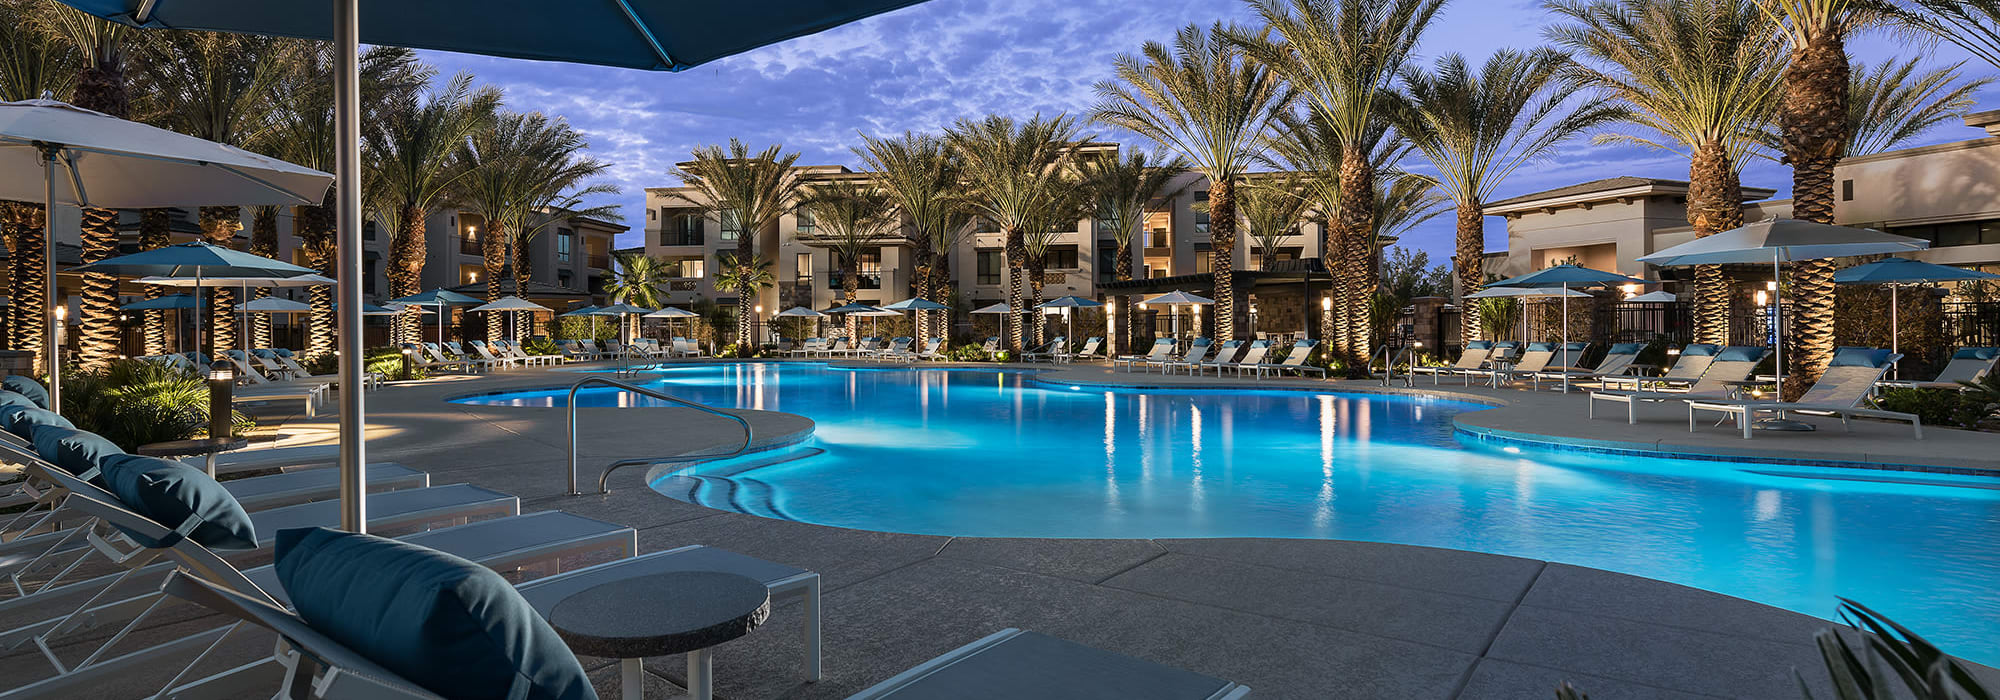 Resort style pool at San Artes in Scottsdale, Arizona